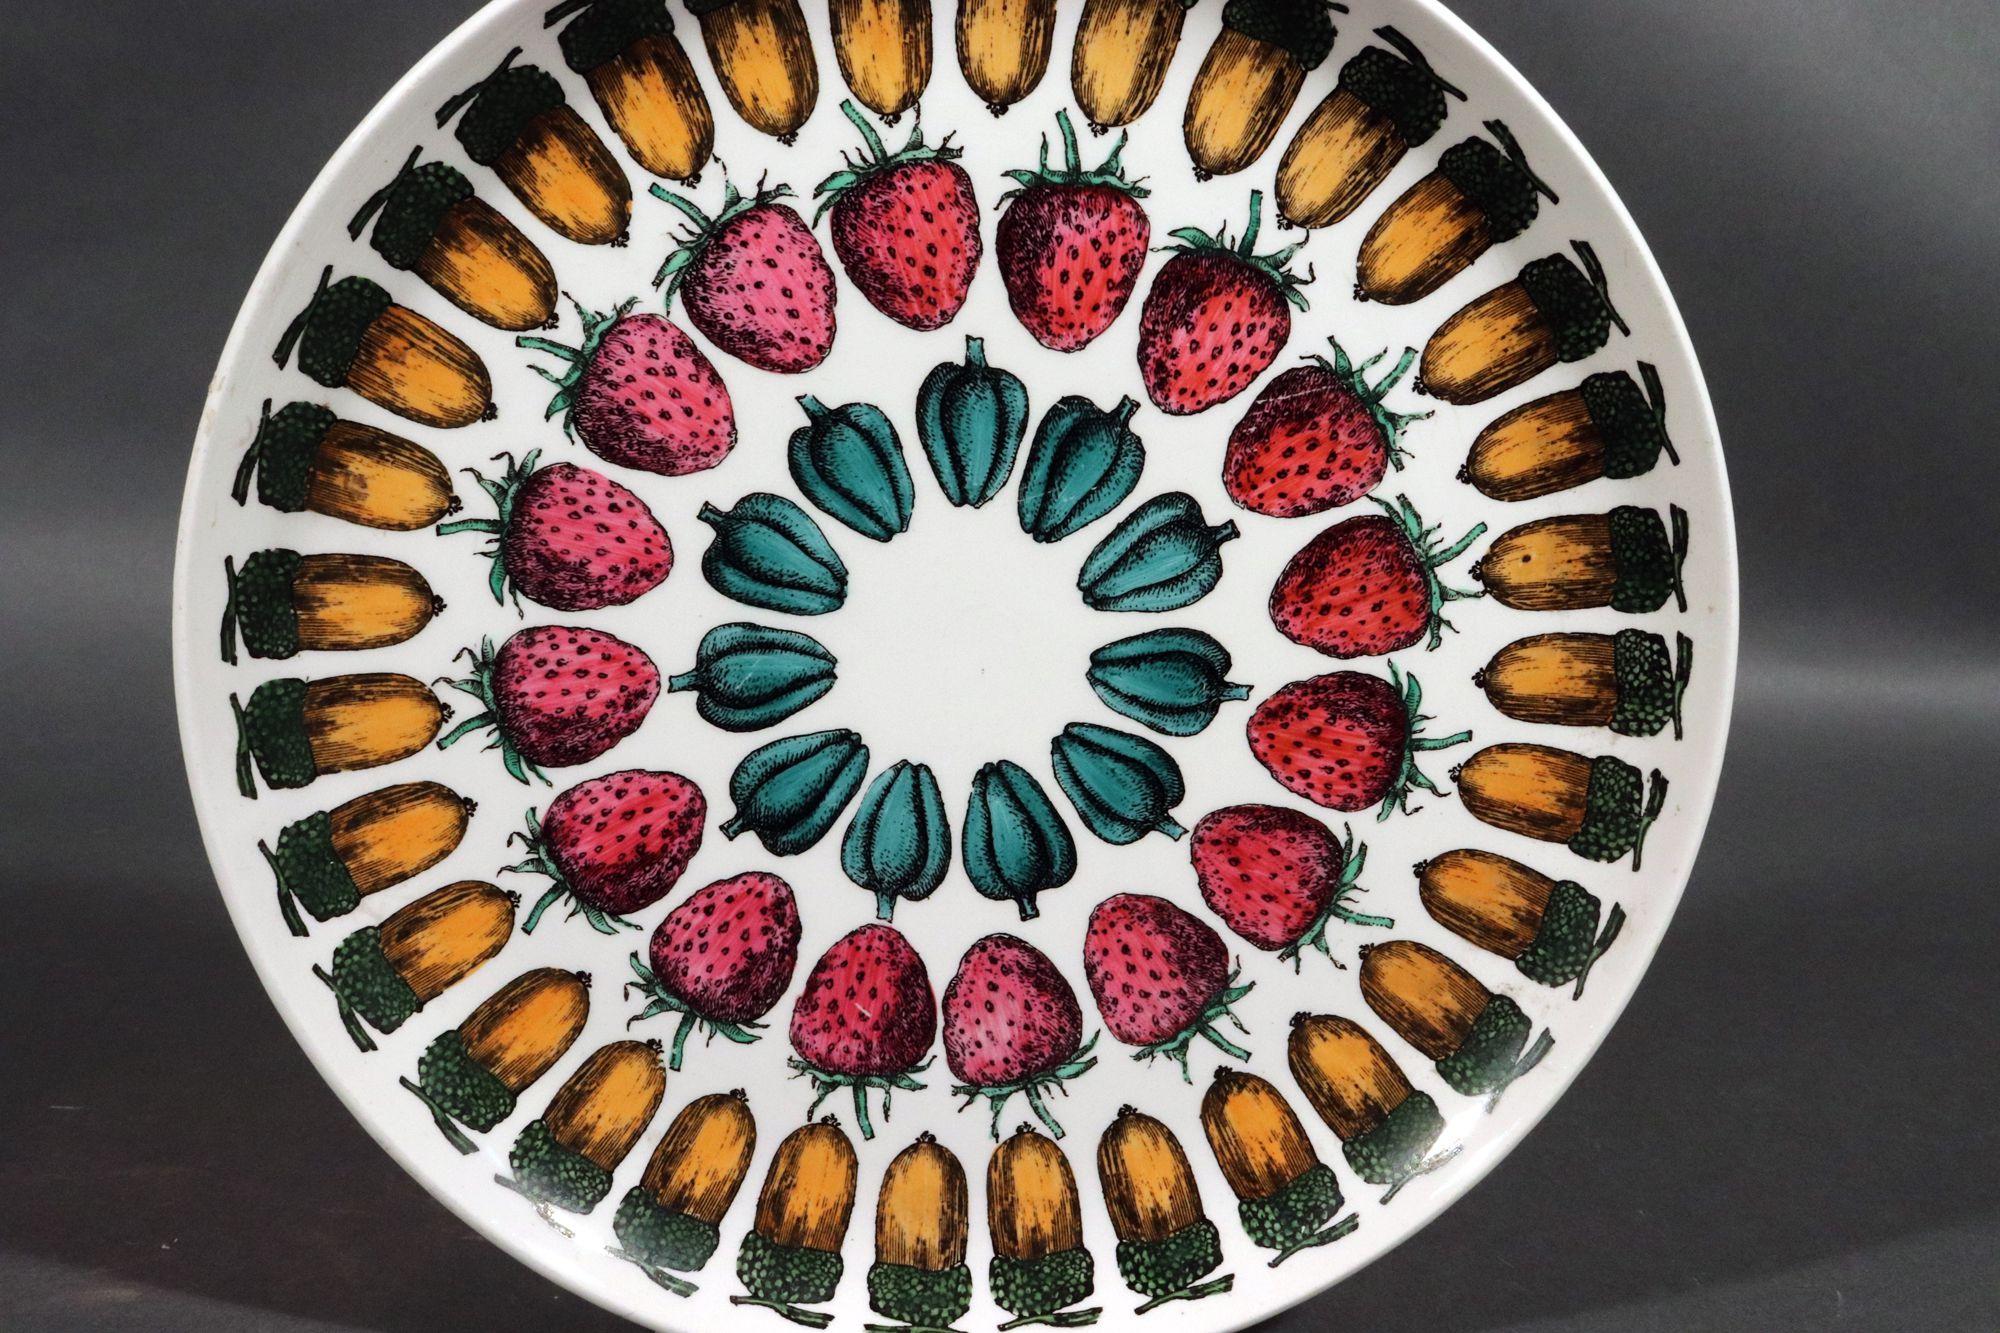 Piero Fornasetti Porcelain Plates, Giostra di Frutta (Merry-go-Round of Fruit) For Sale 1